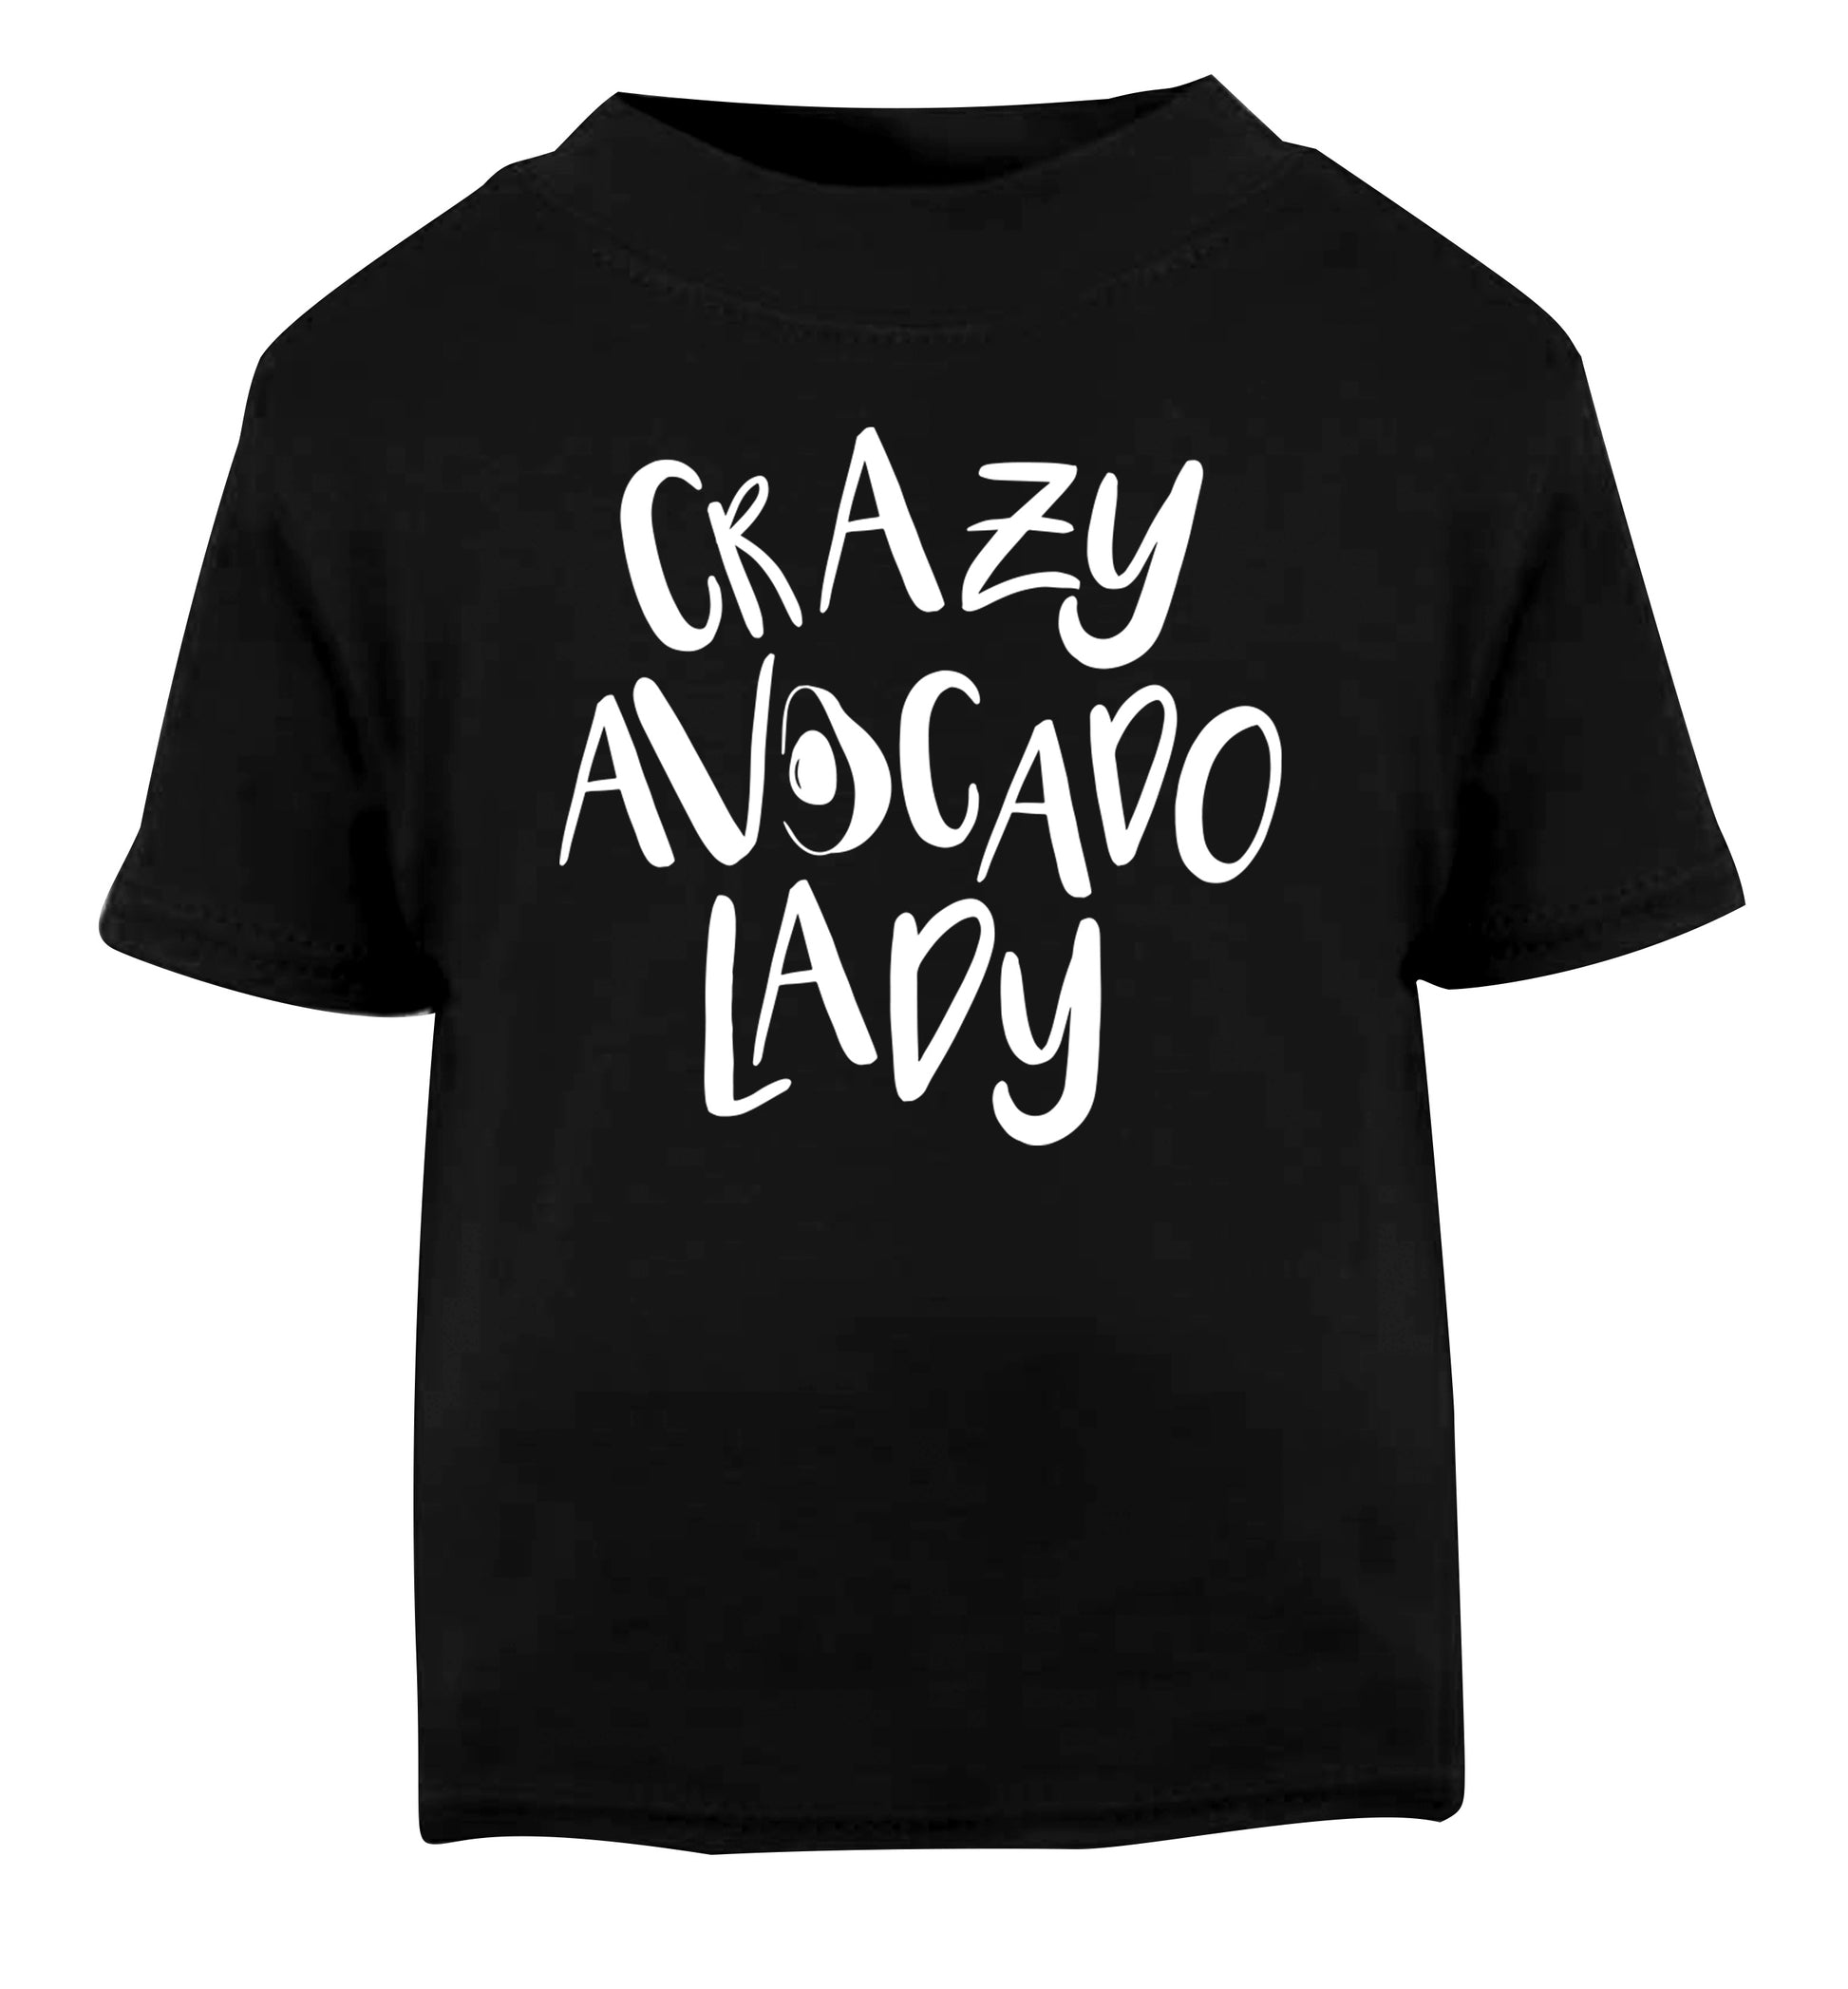 Crazy avocado lady Black Baby Toddler Tshirt 2 years